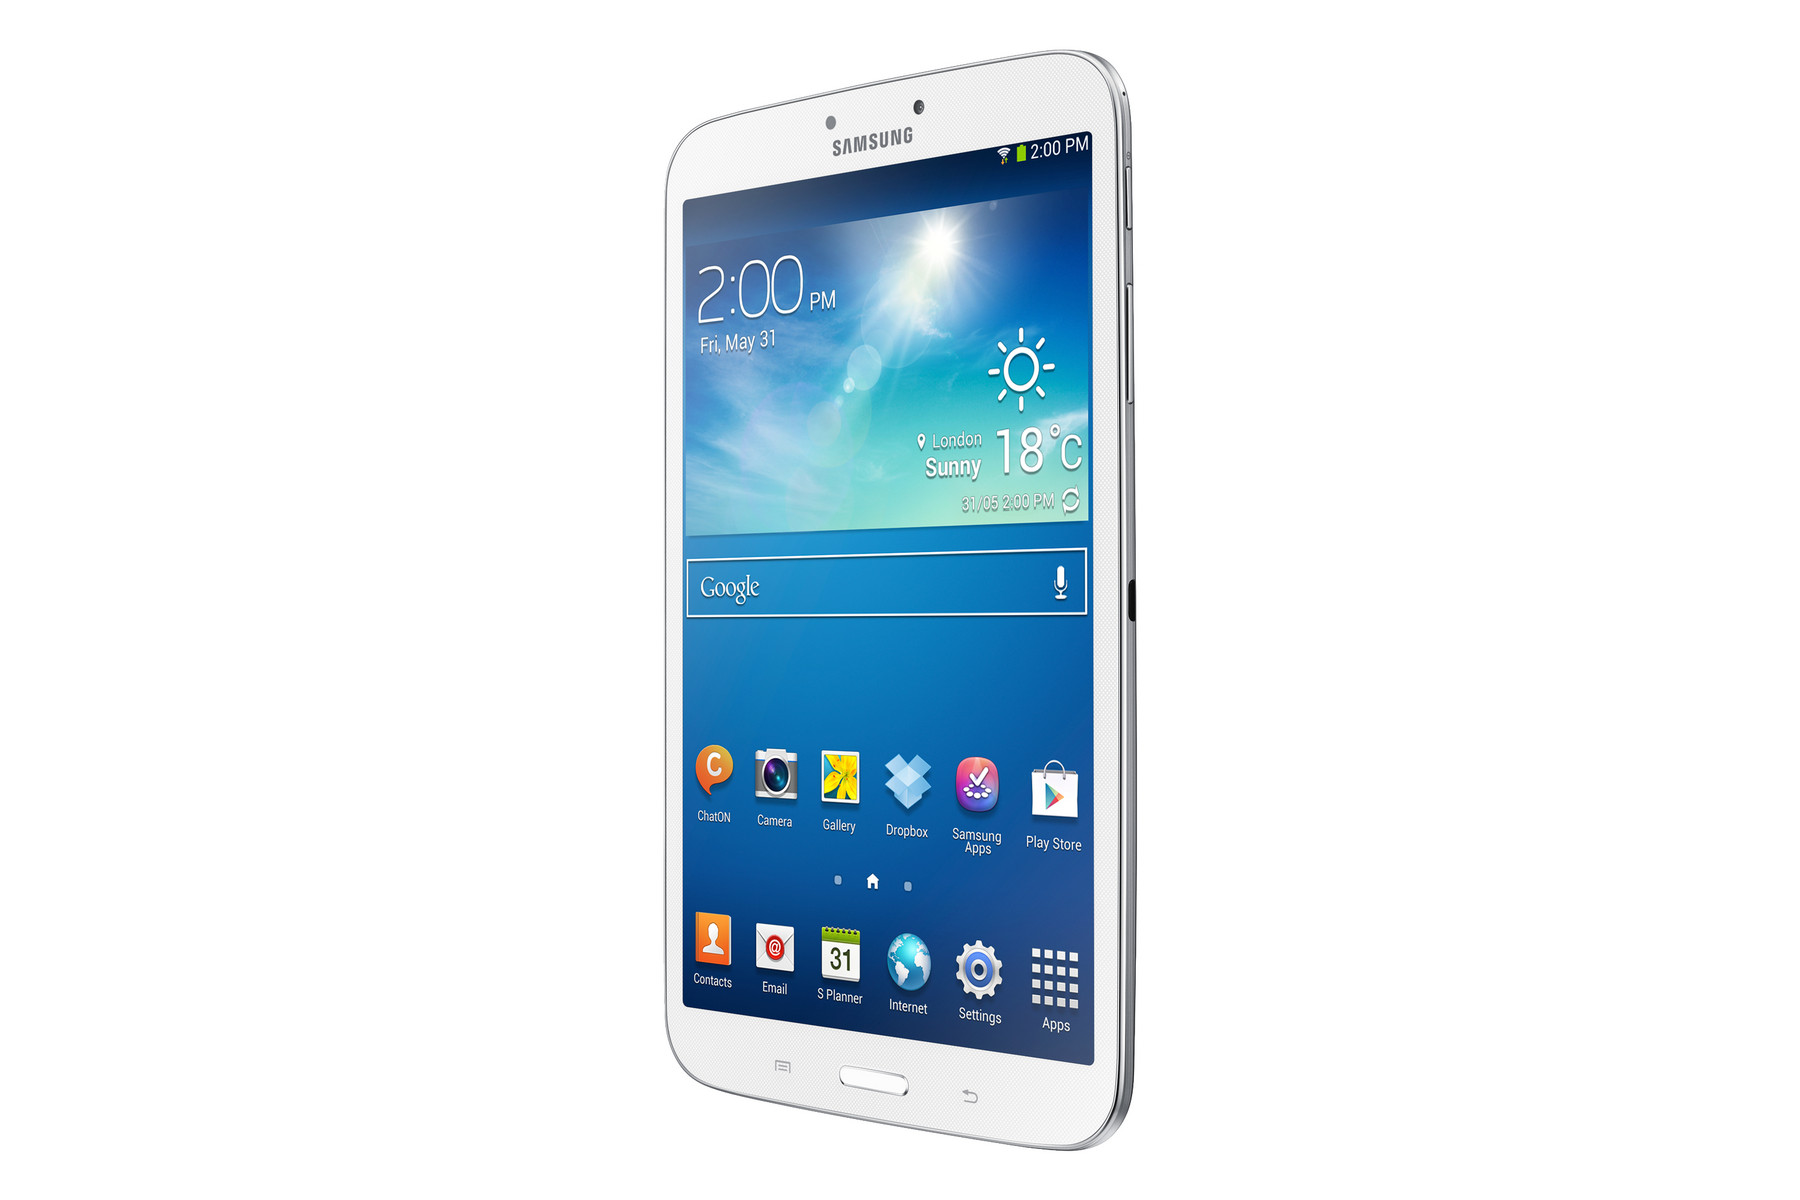 Samsung Galaxy Tab 3 8.0 Hard Reset